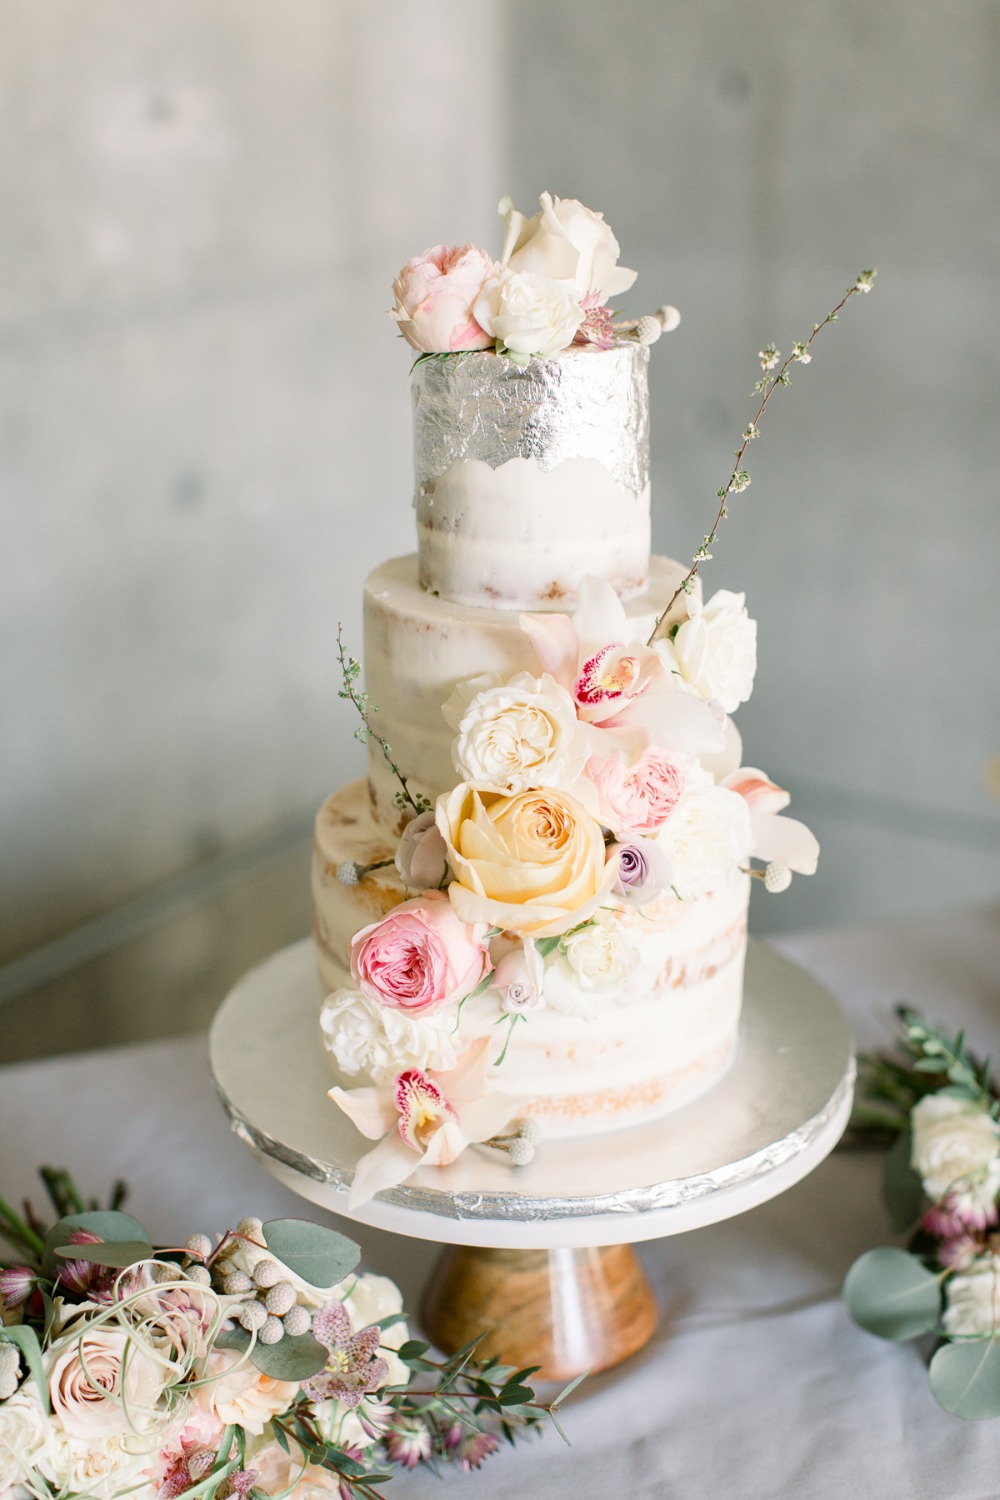 Naked metallic wedding cake with florals